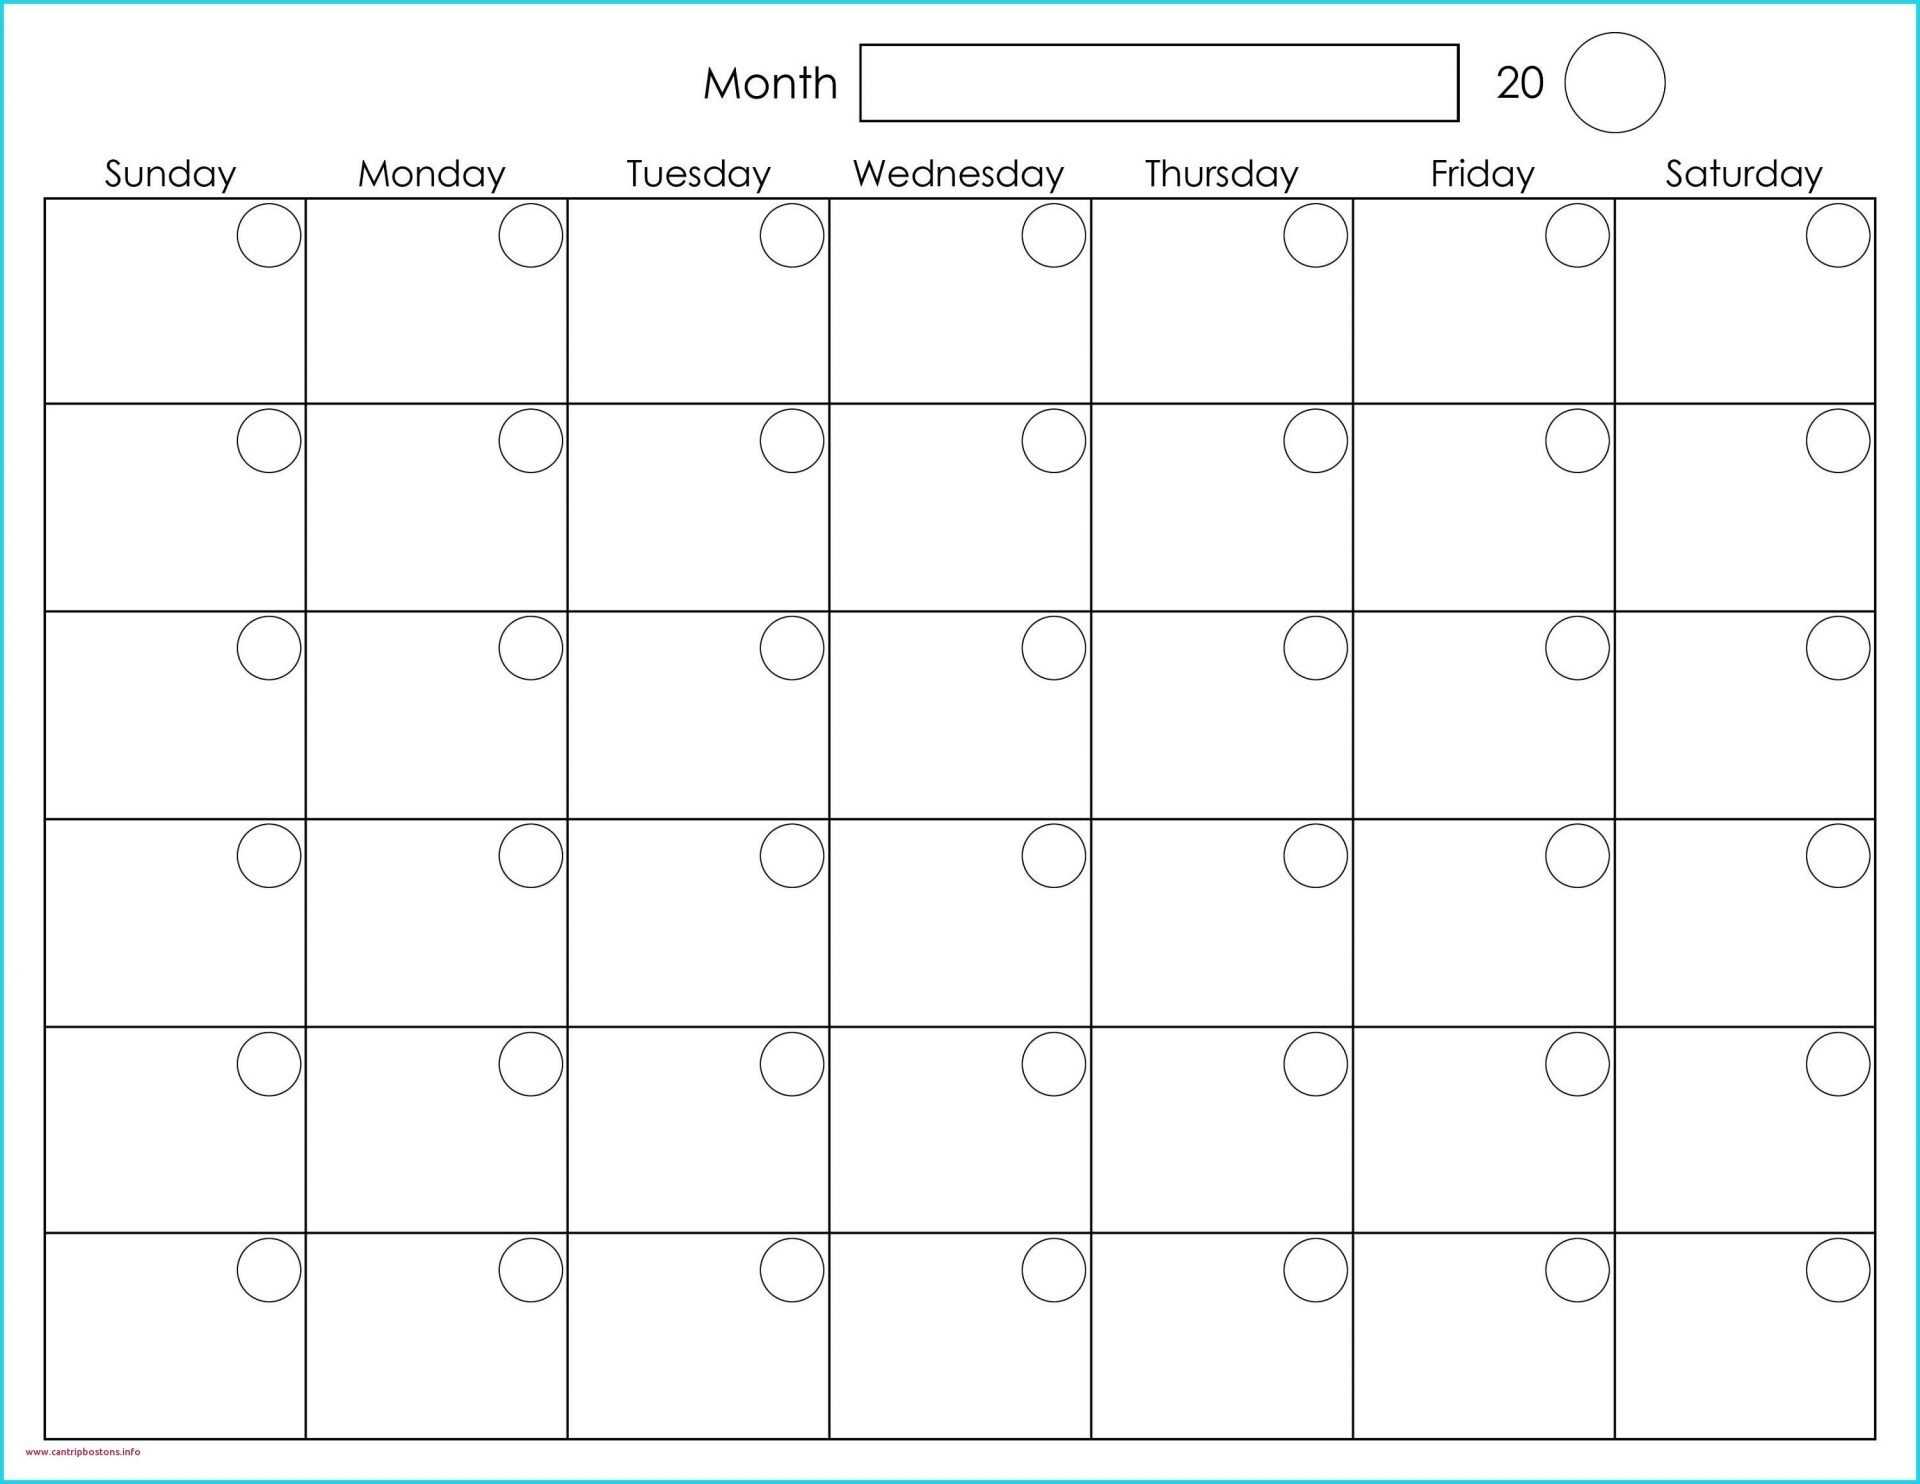 Month At A Glance Blank Calendar Printable | Monthly For Month At A Glance Blank Calendar Template